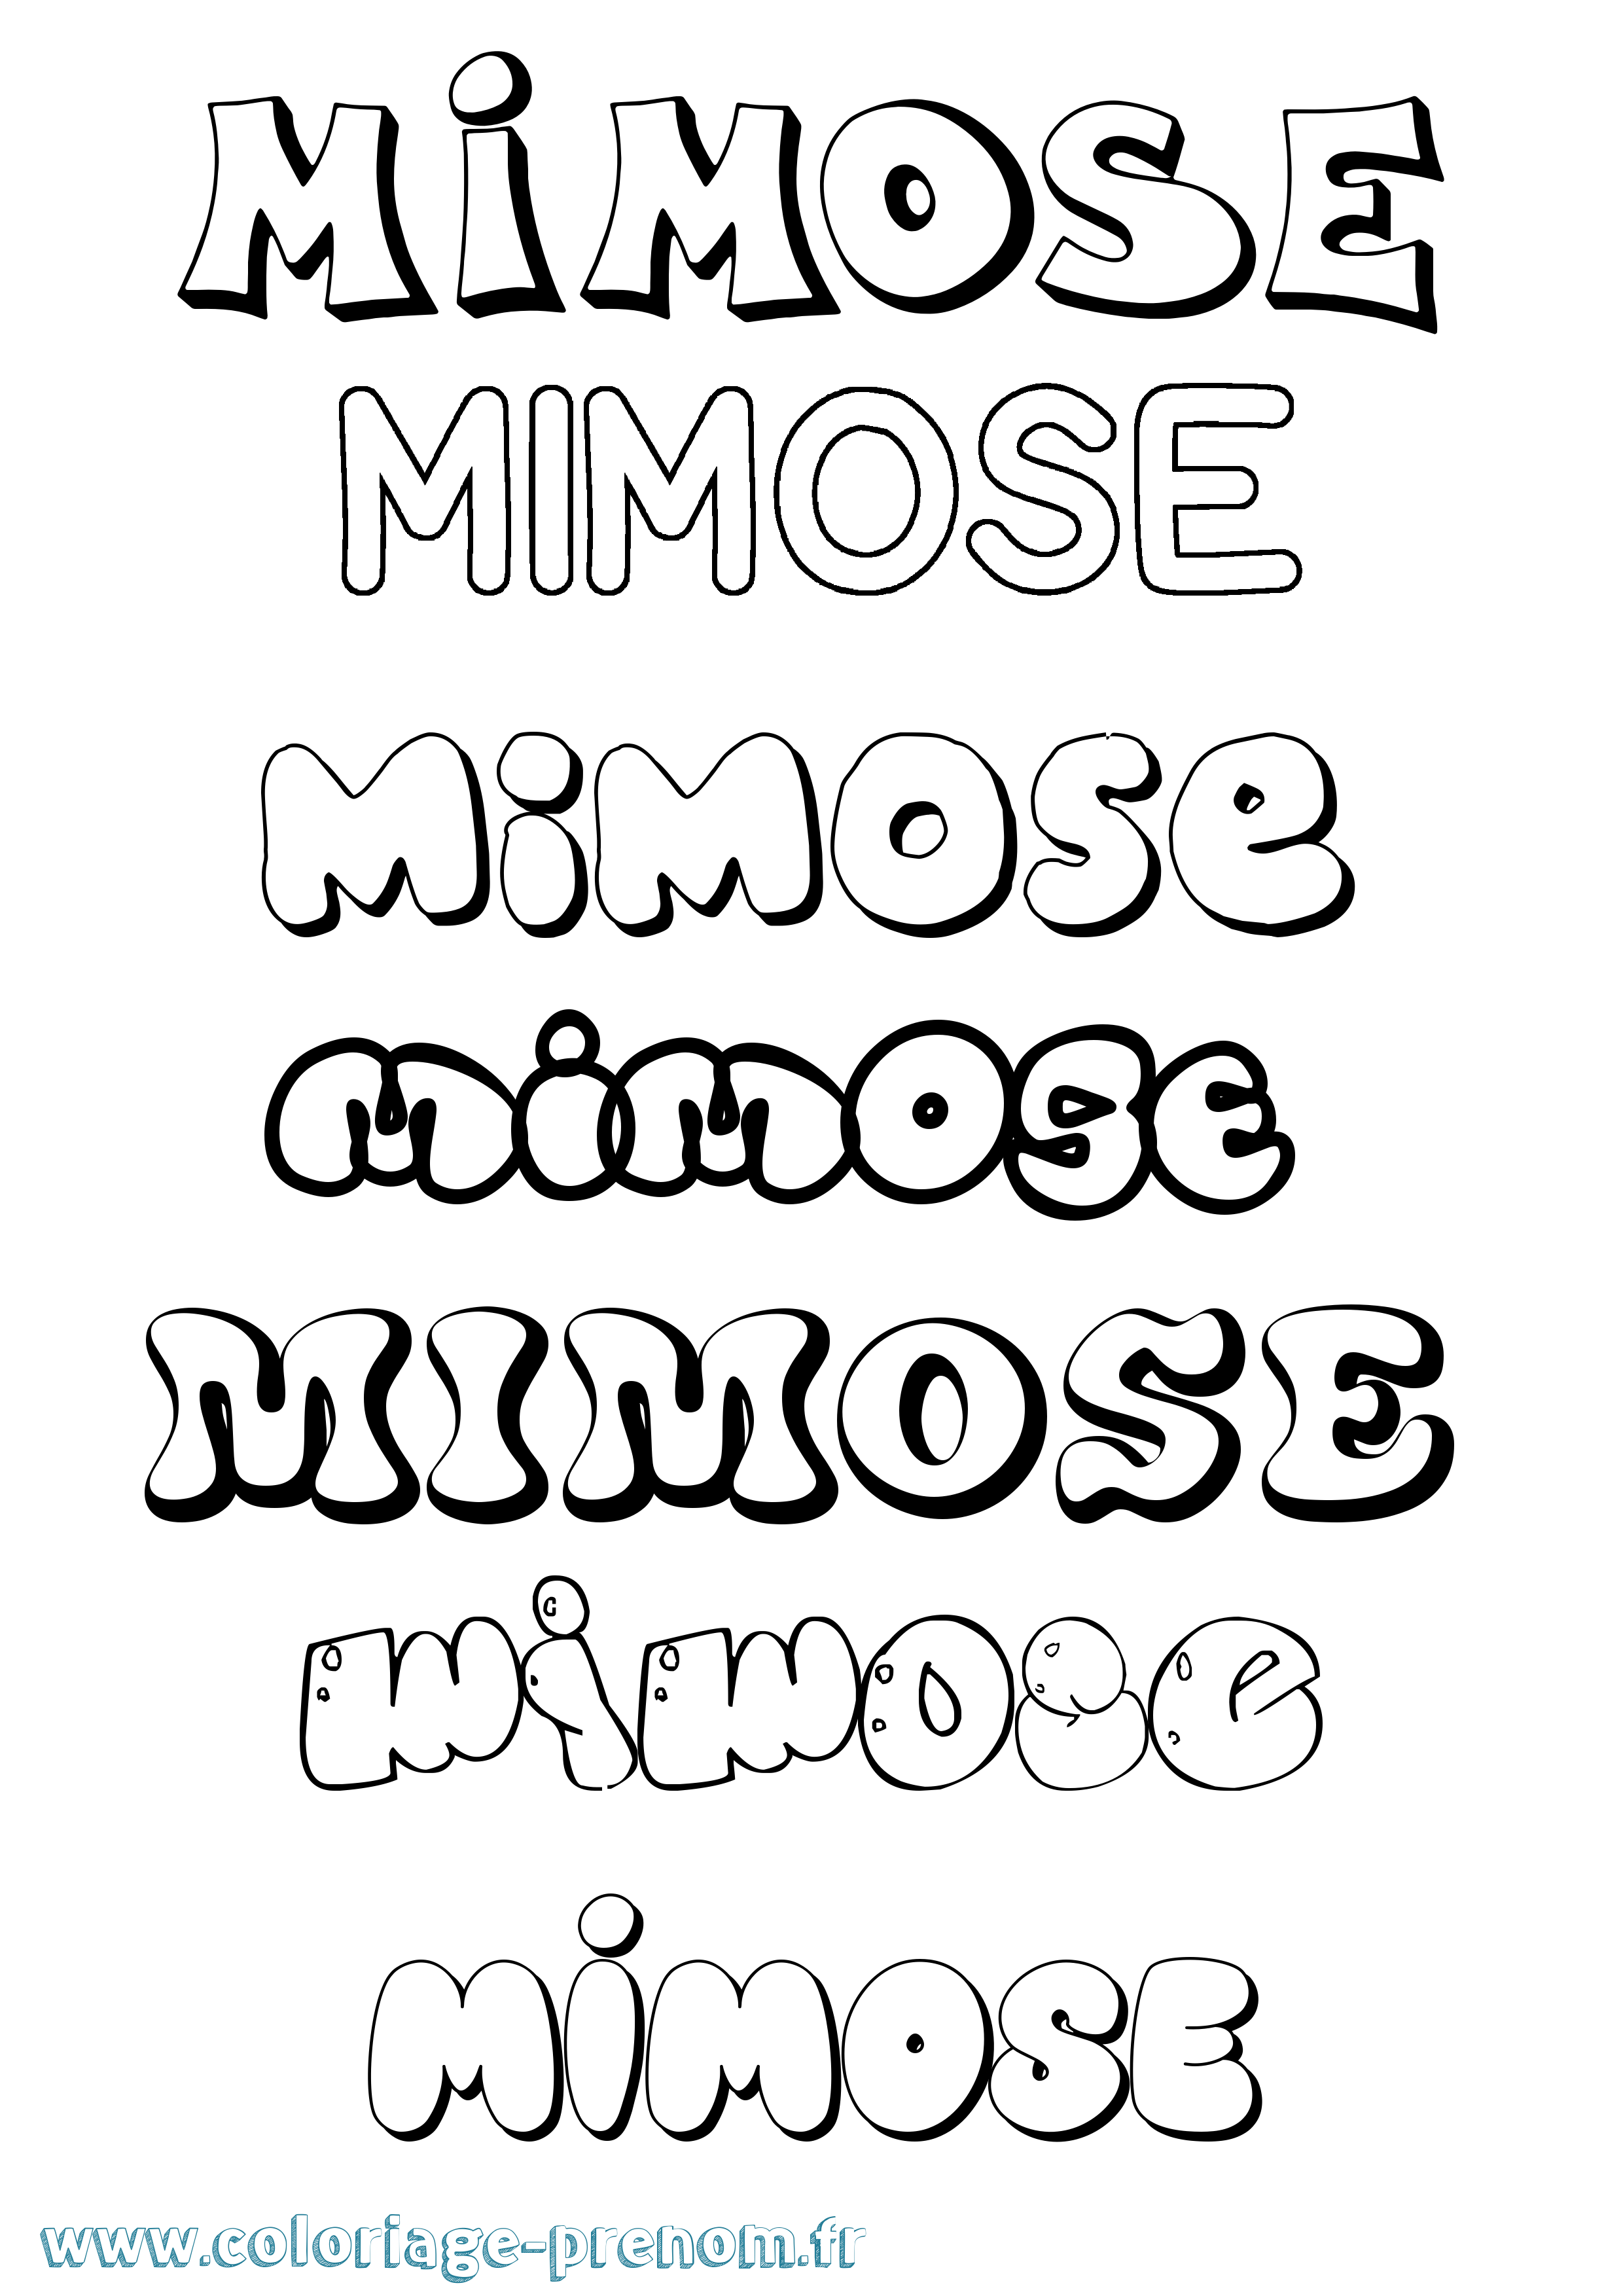 Coloriage prénom Mimose Bubble